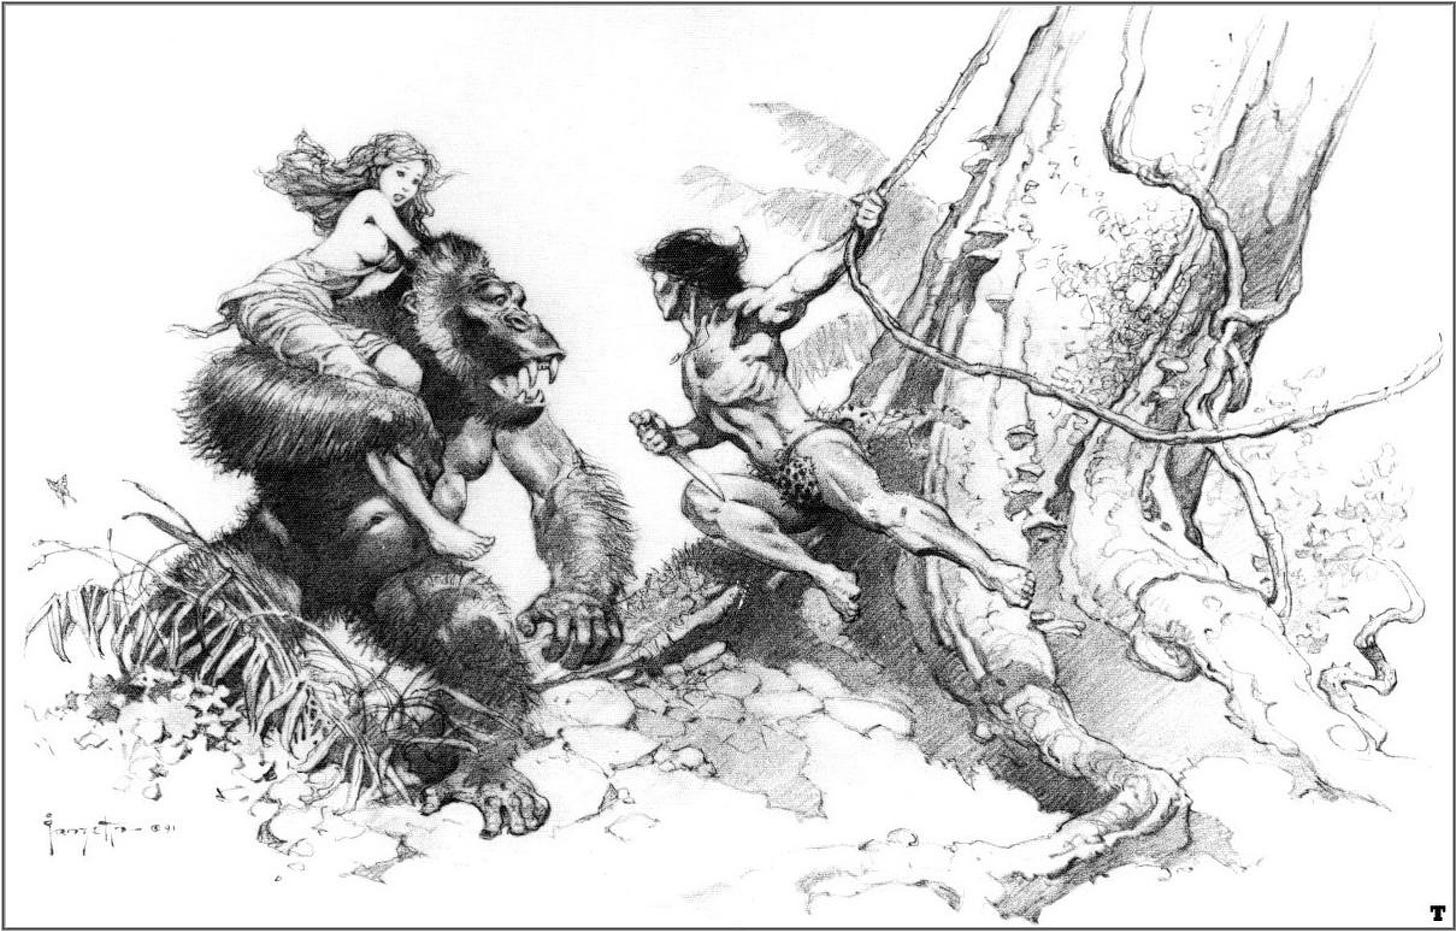 Tarzan by Frank Frazetta: History, Analysis & Facts | Arthive